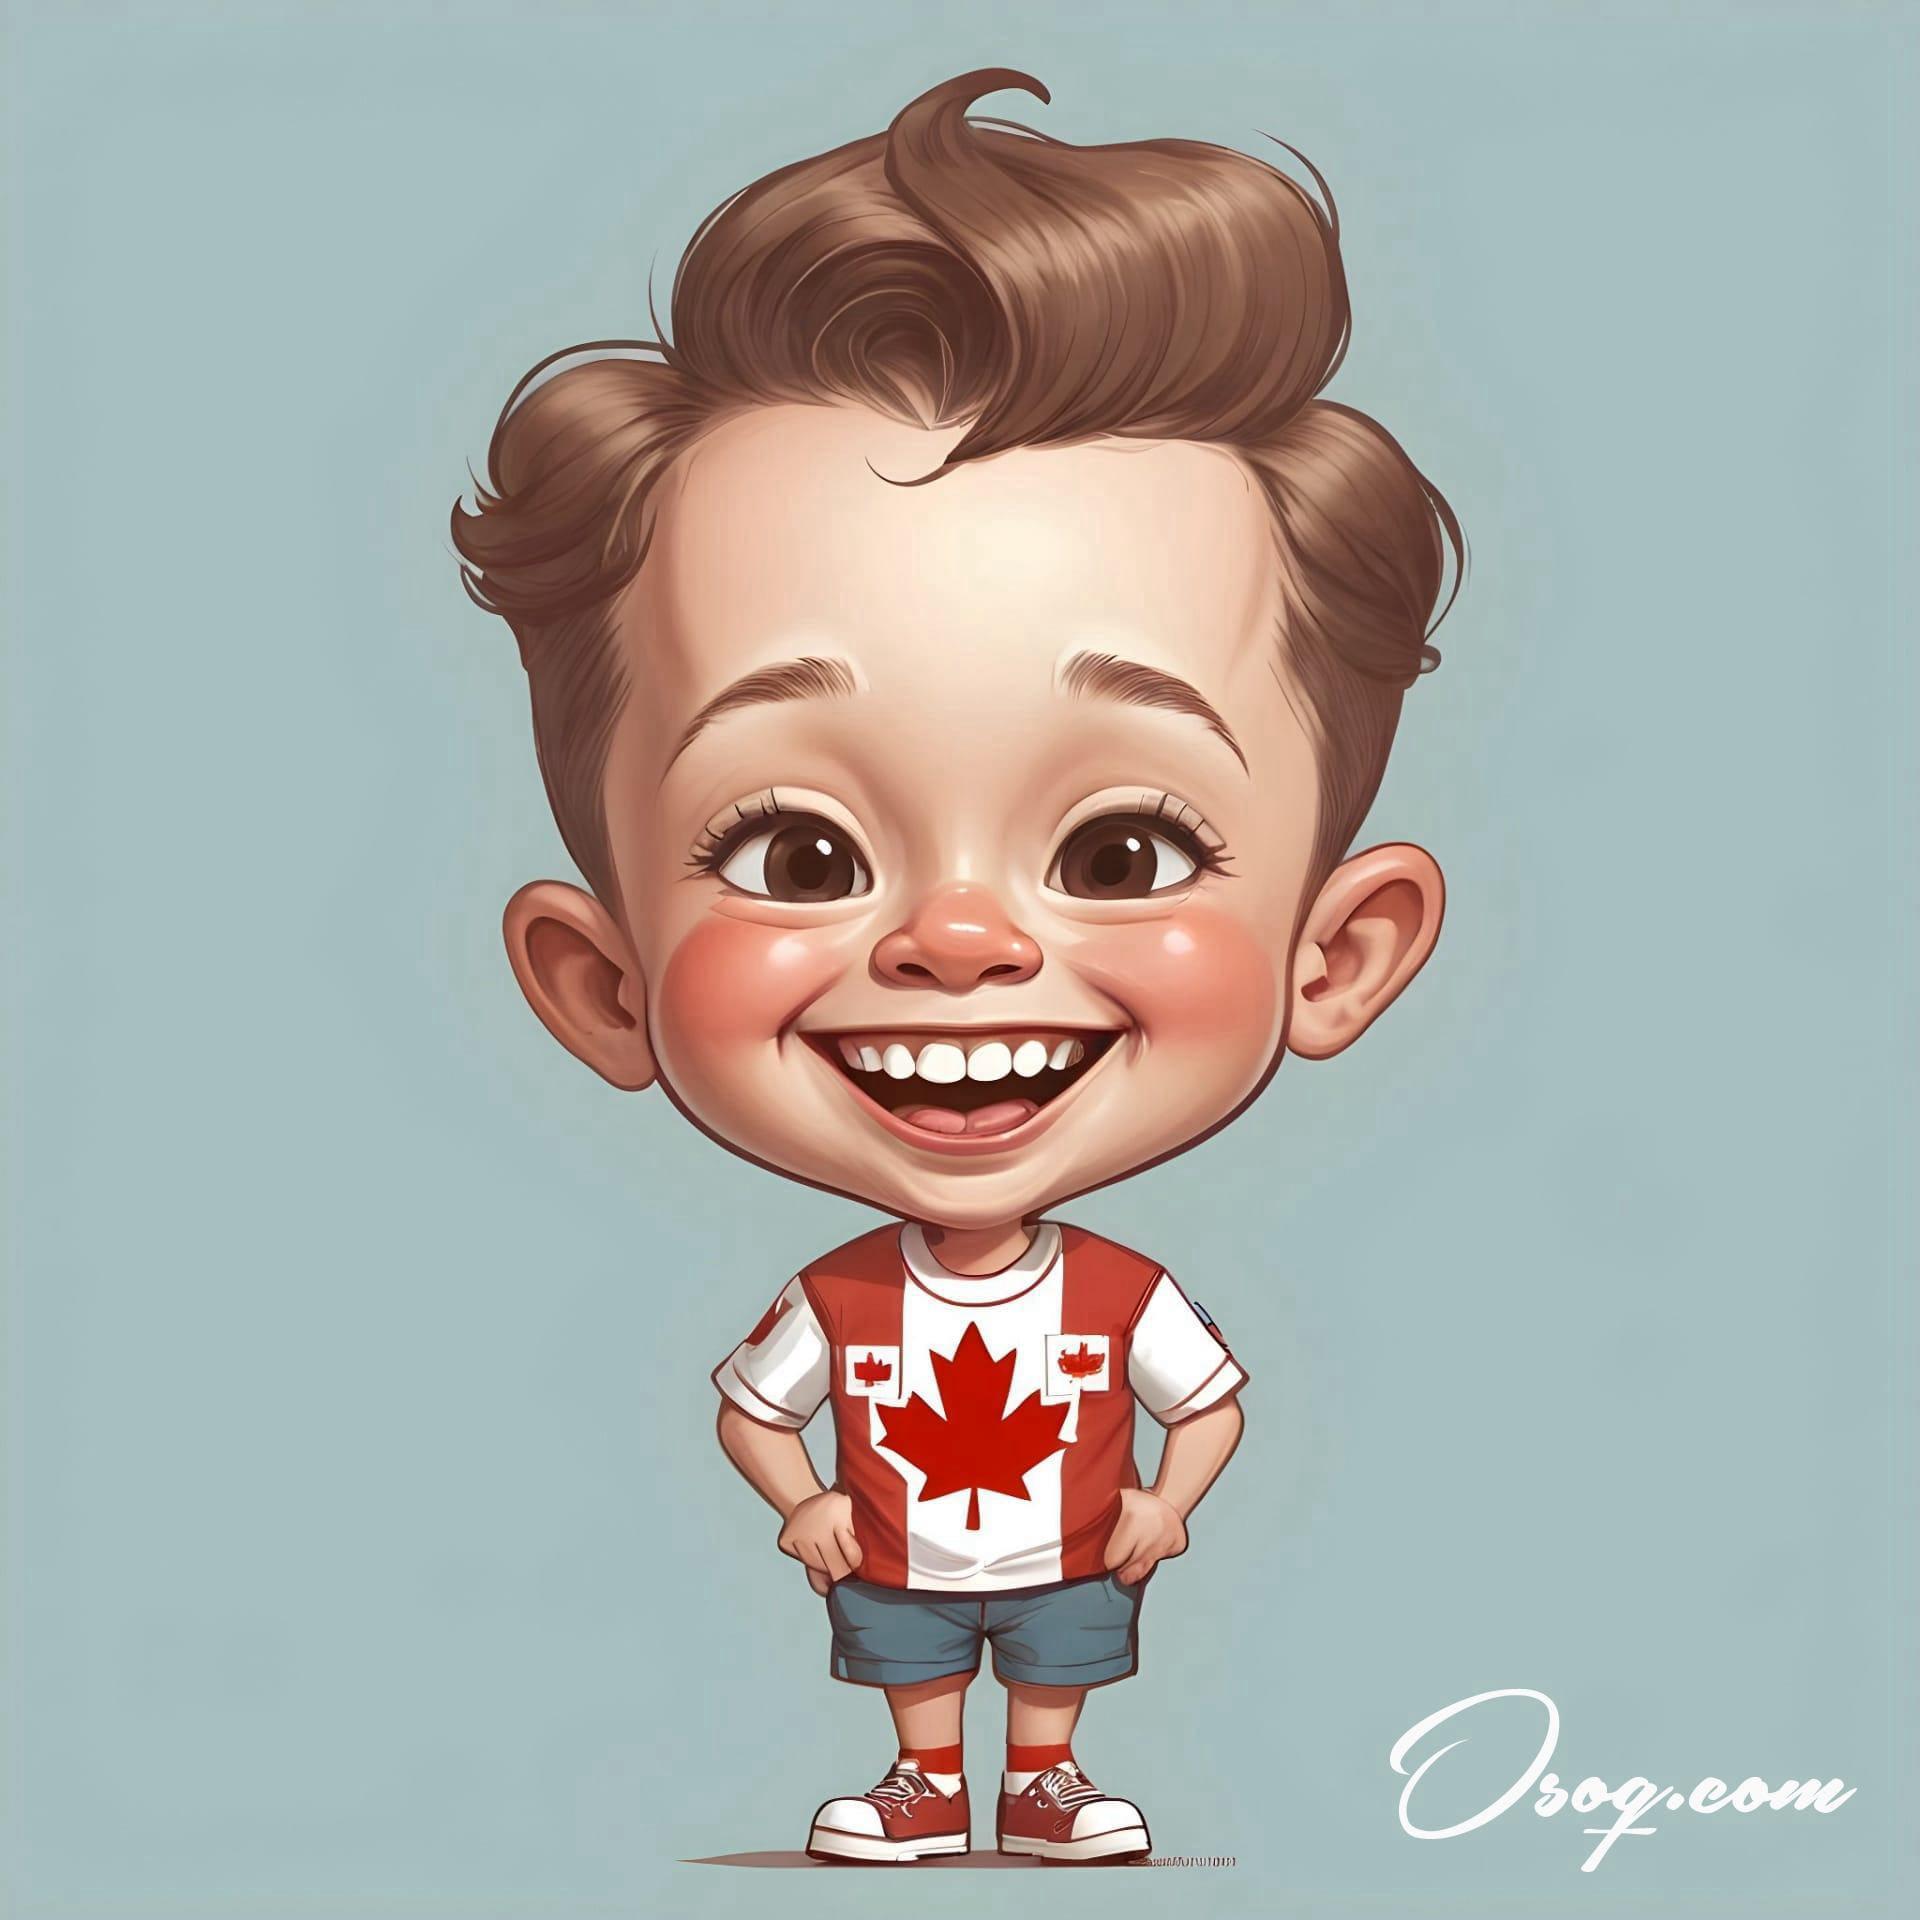 Canadian cartoon 01